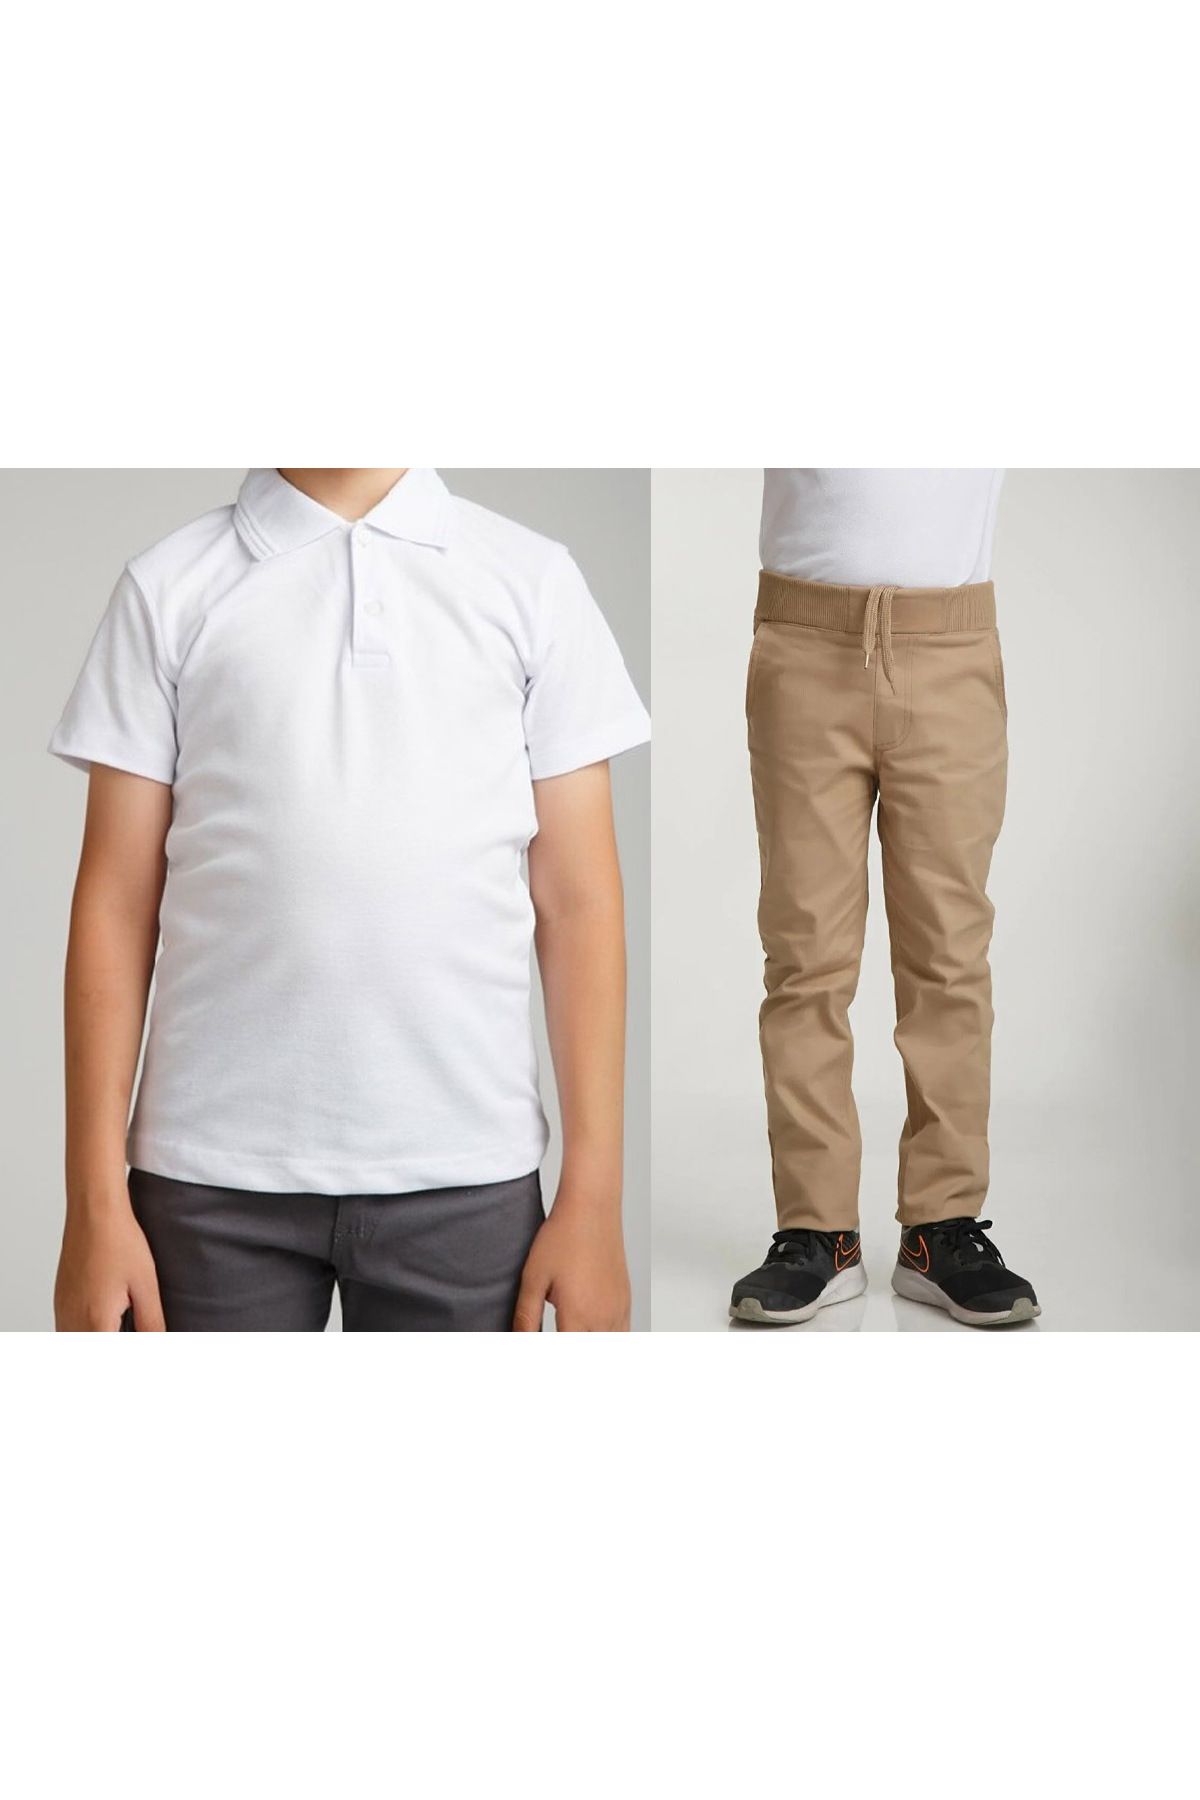 Next Unisex Children's White T-shirt Set of 2 - Trendyol